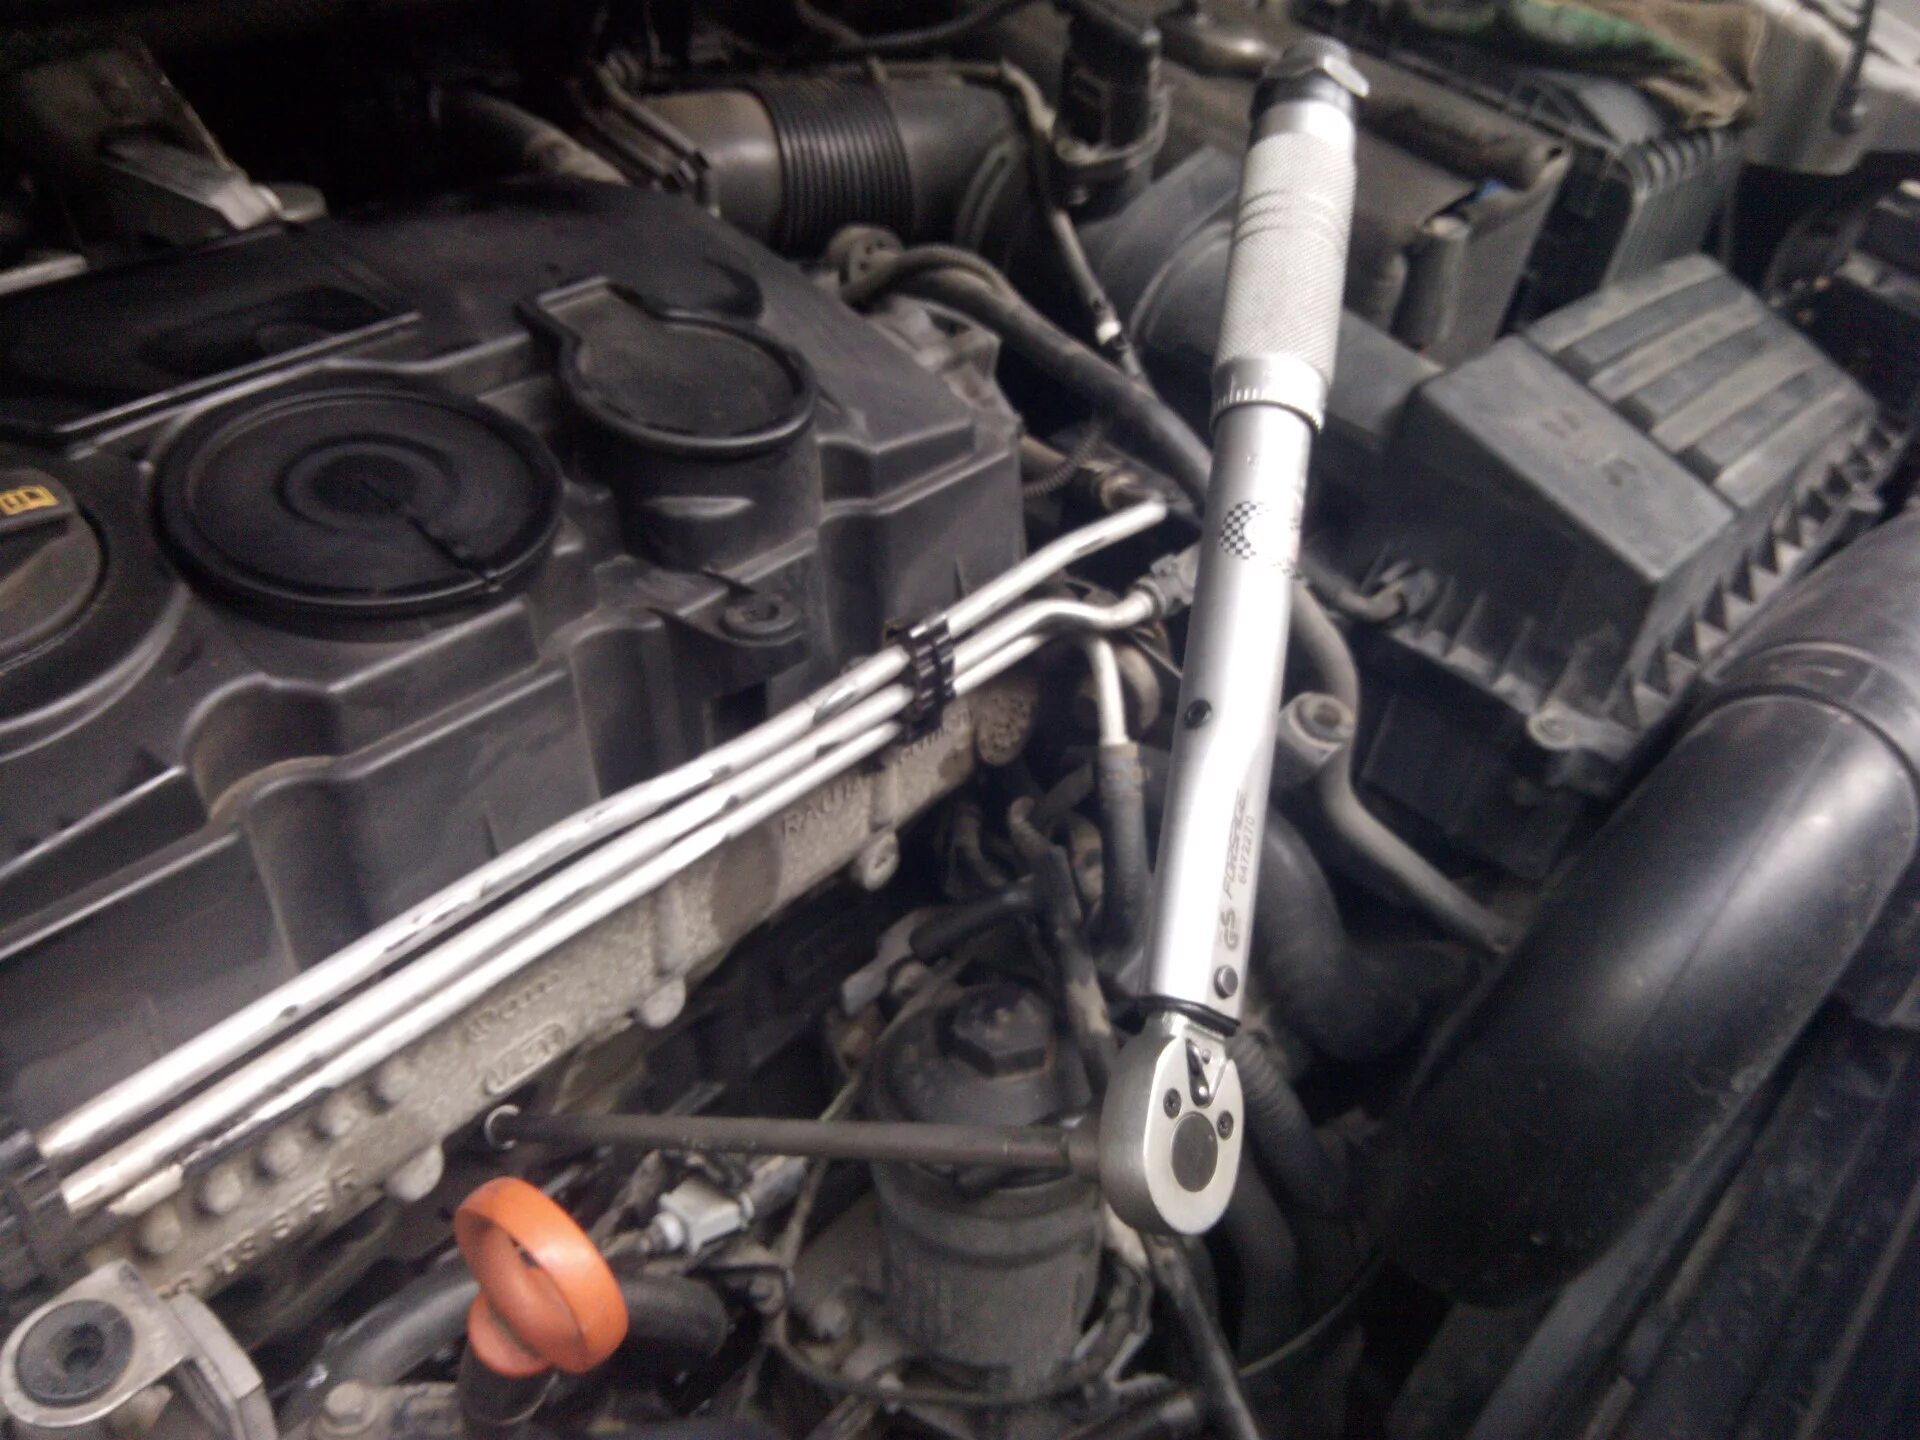 Двигатель 1 9 TDI Фольксваген т5 свечи накала. Volkswagen Caddy 2.0 TDI свечи накала. Фольксваген Туран 1 6 дизель свечи. Т 6 Фольксваген свечи накала. Свеча накала фольксваген т5